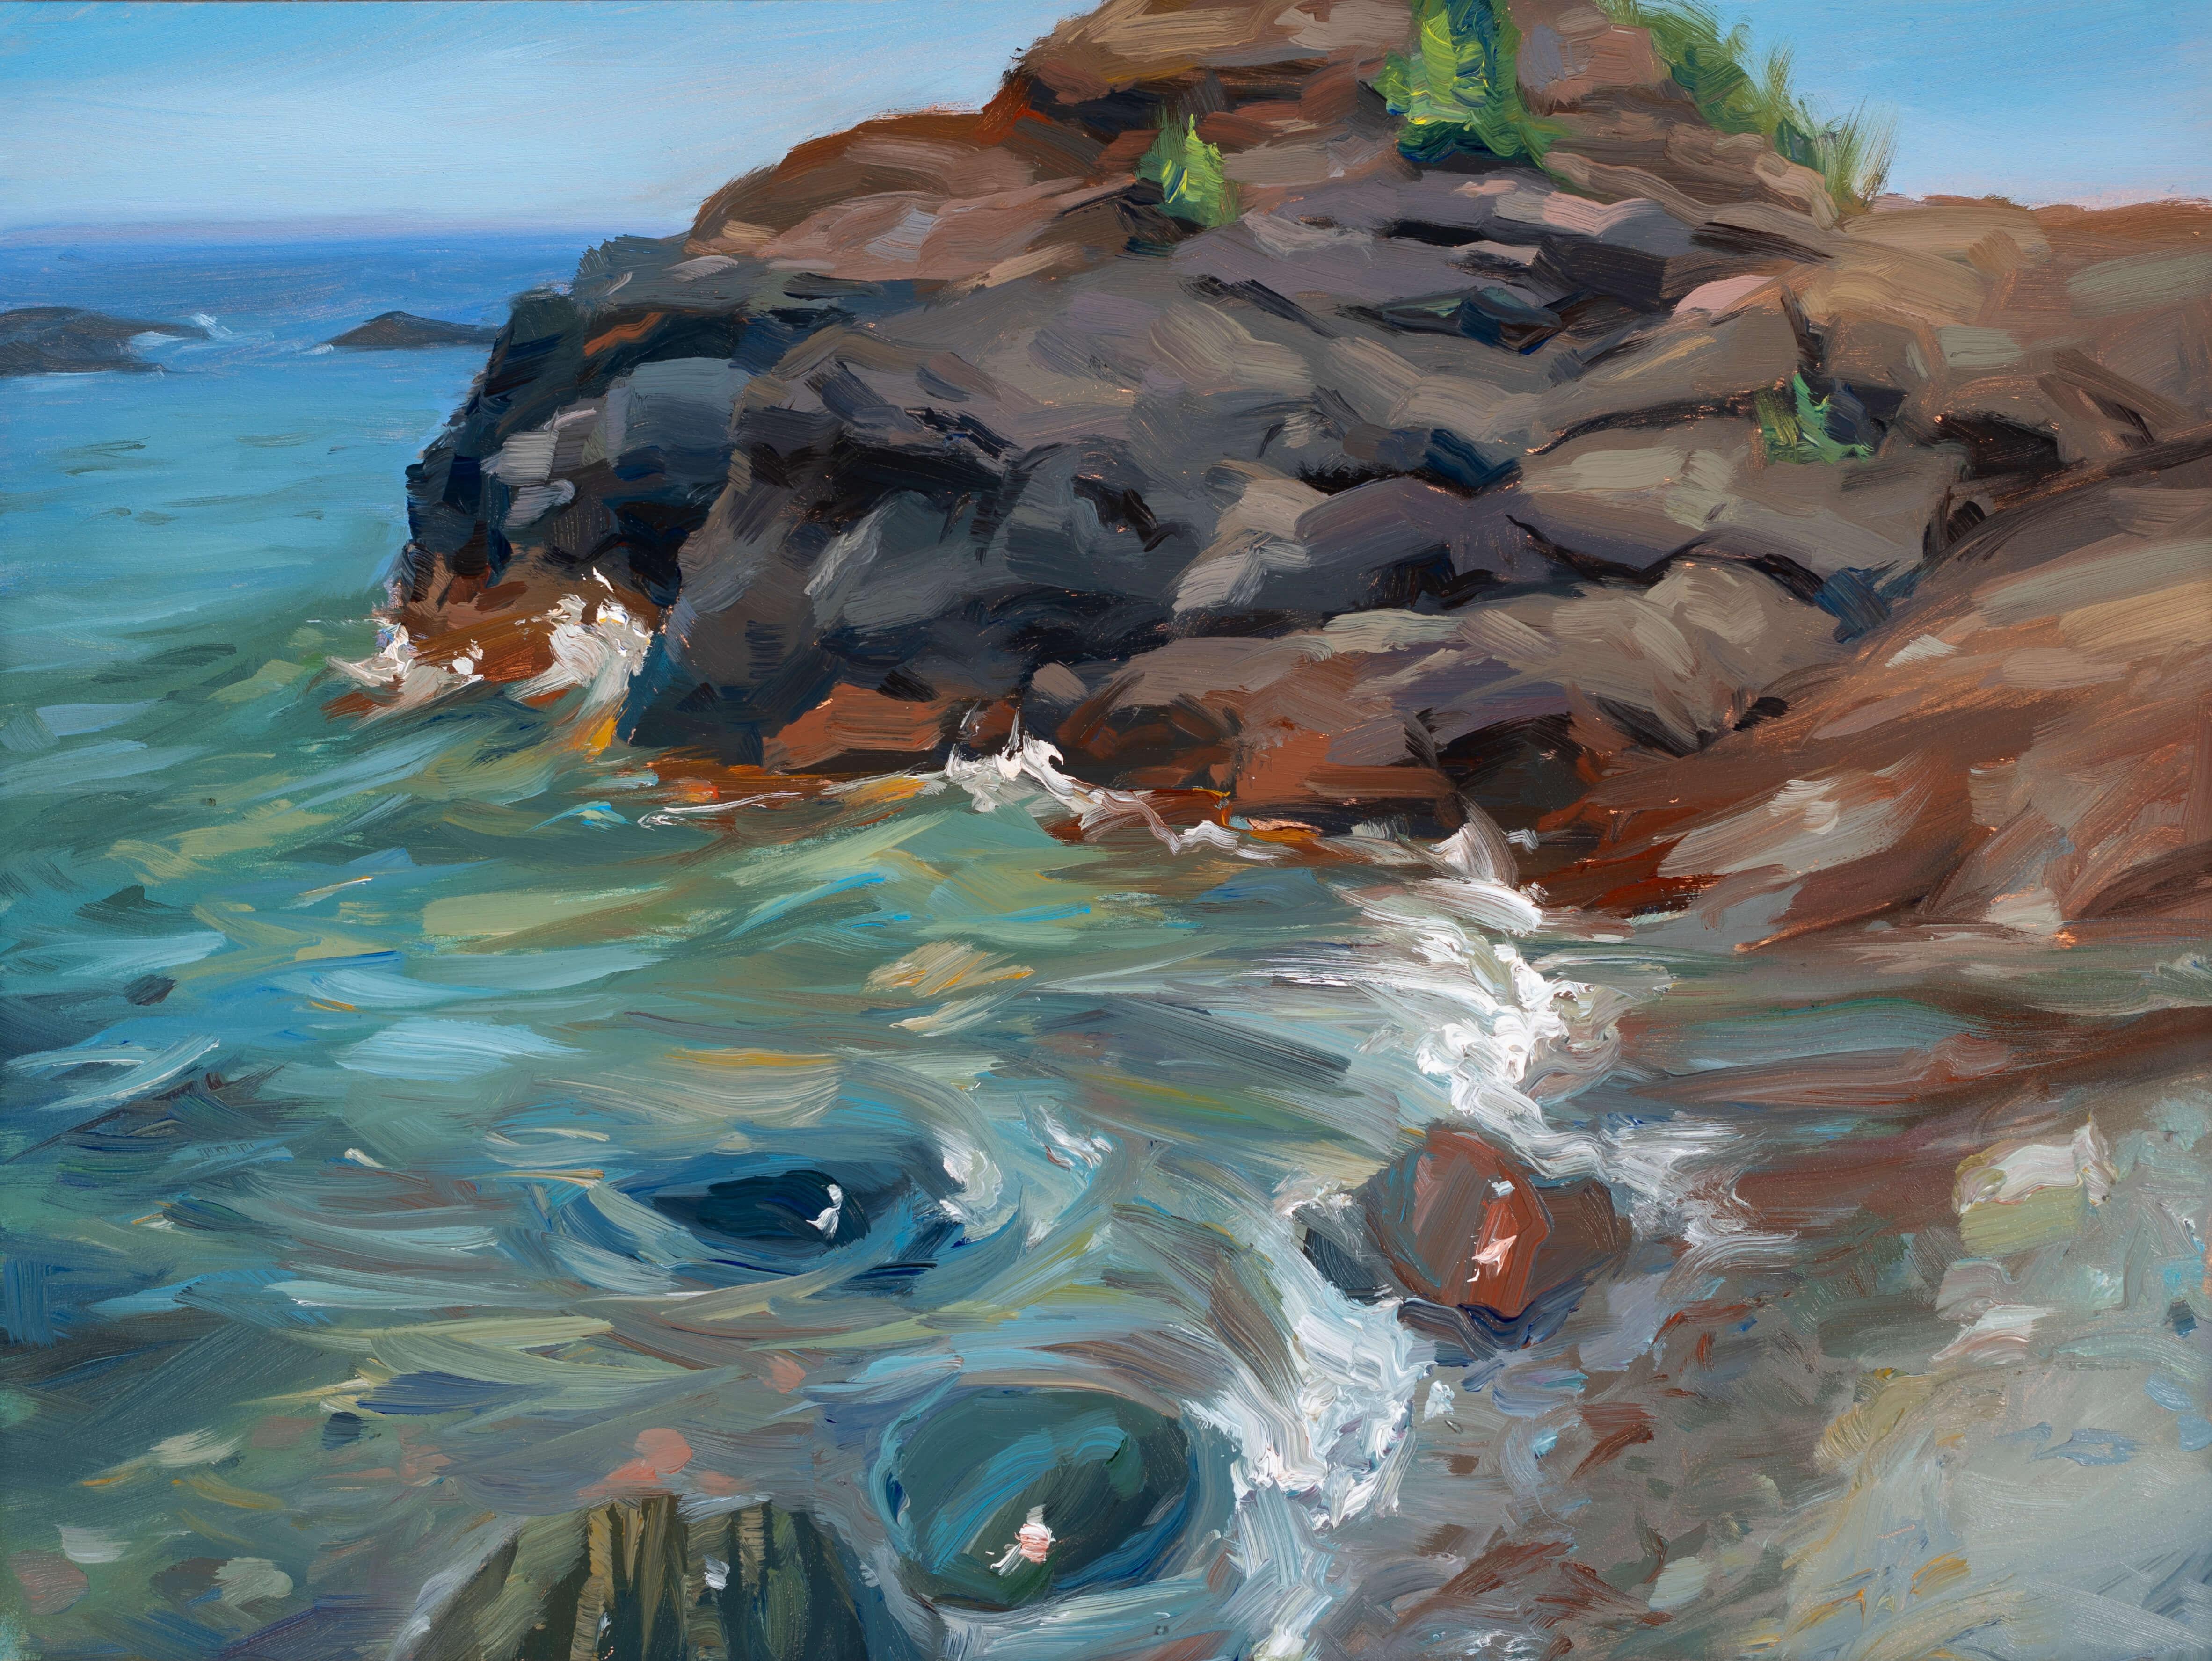 Primary Hughes Landscape Painting - Presque Isle (Day 83) June 7, 2022, Original Oil Painting